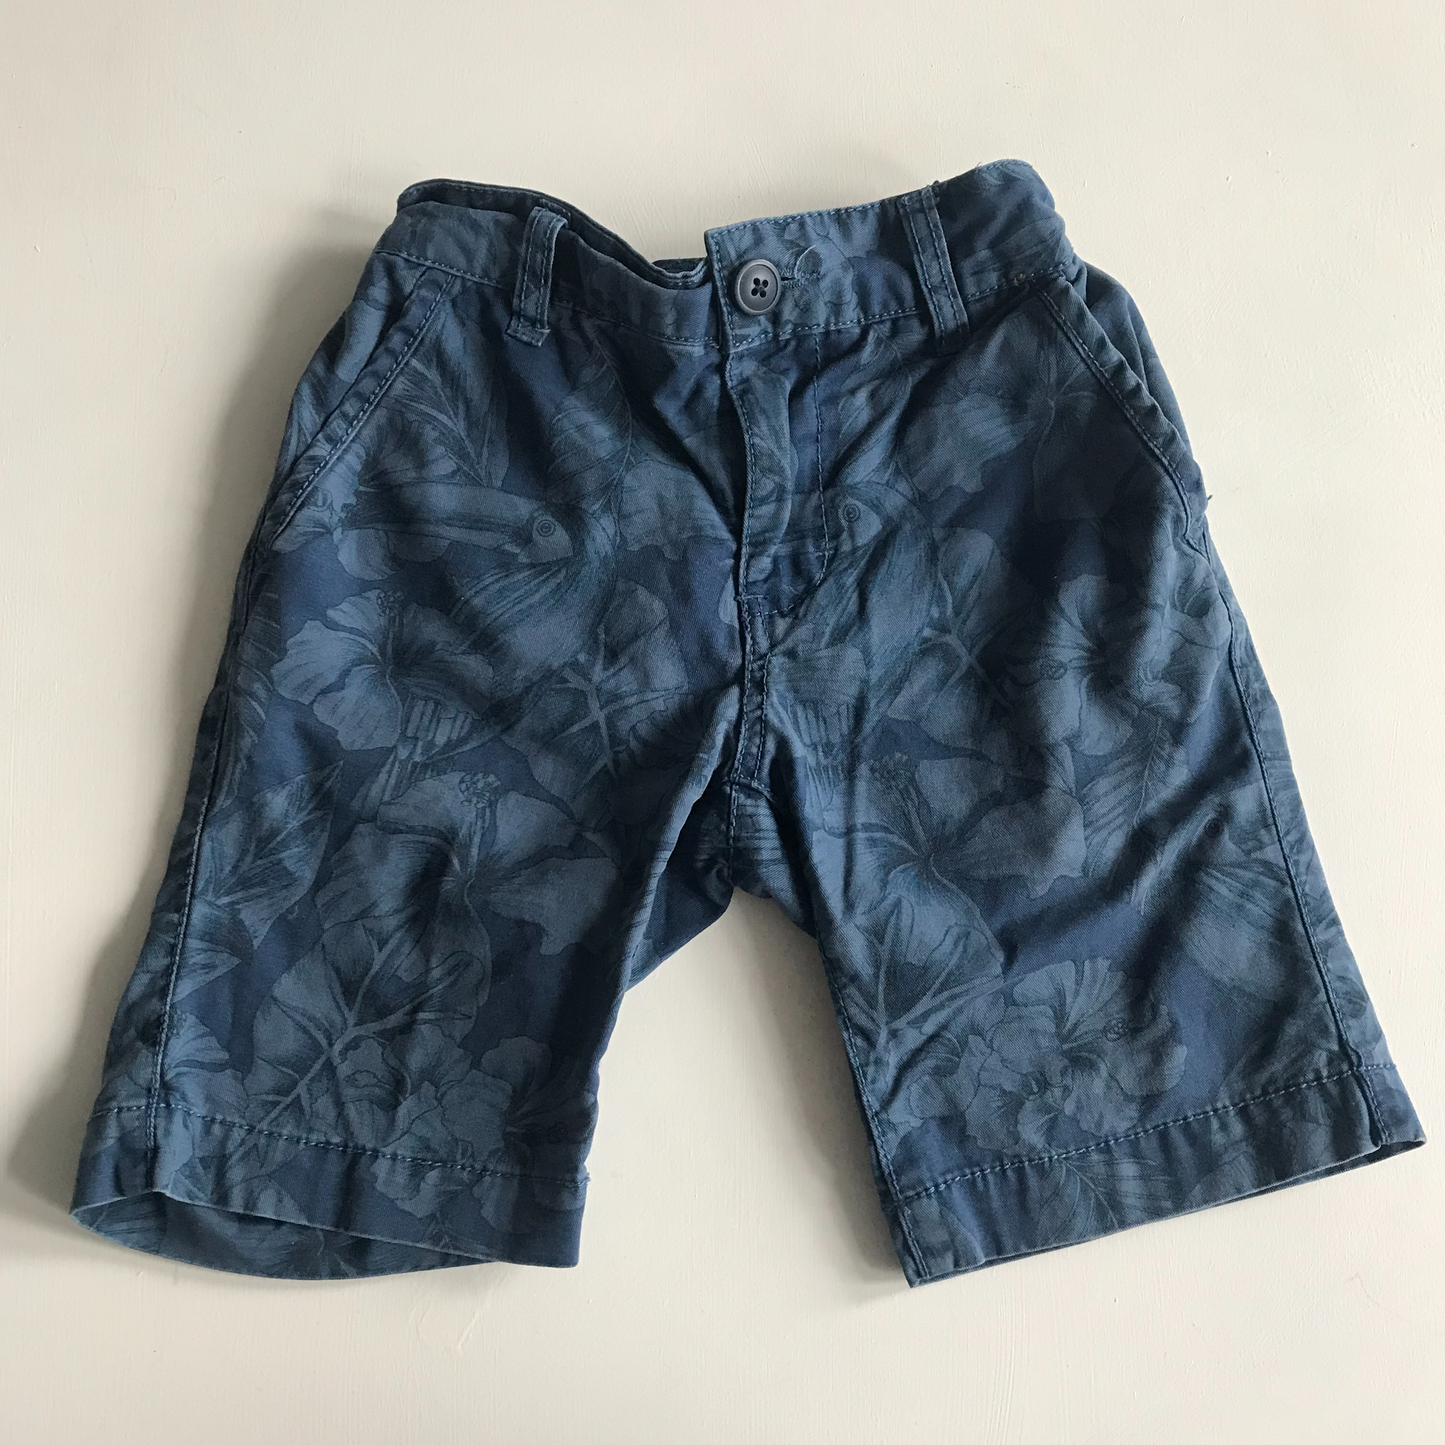 Shorts - Blue Floral - Age 5